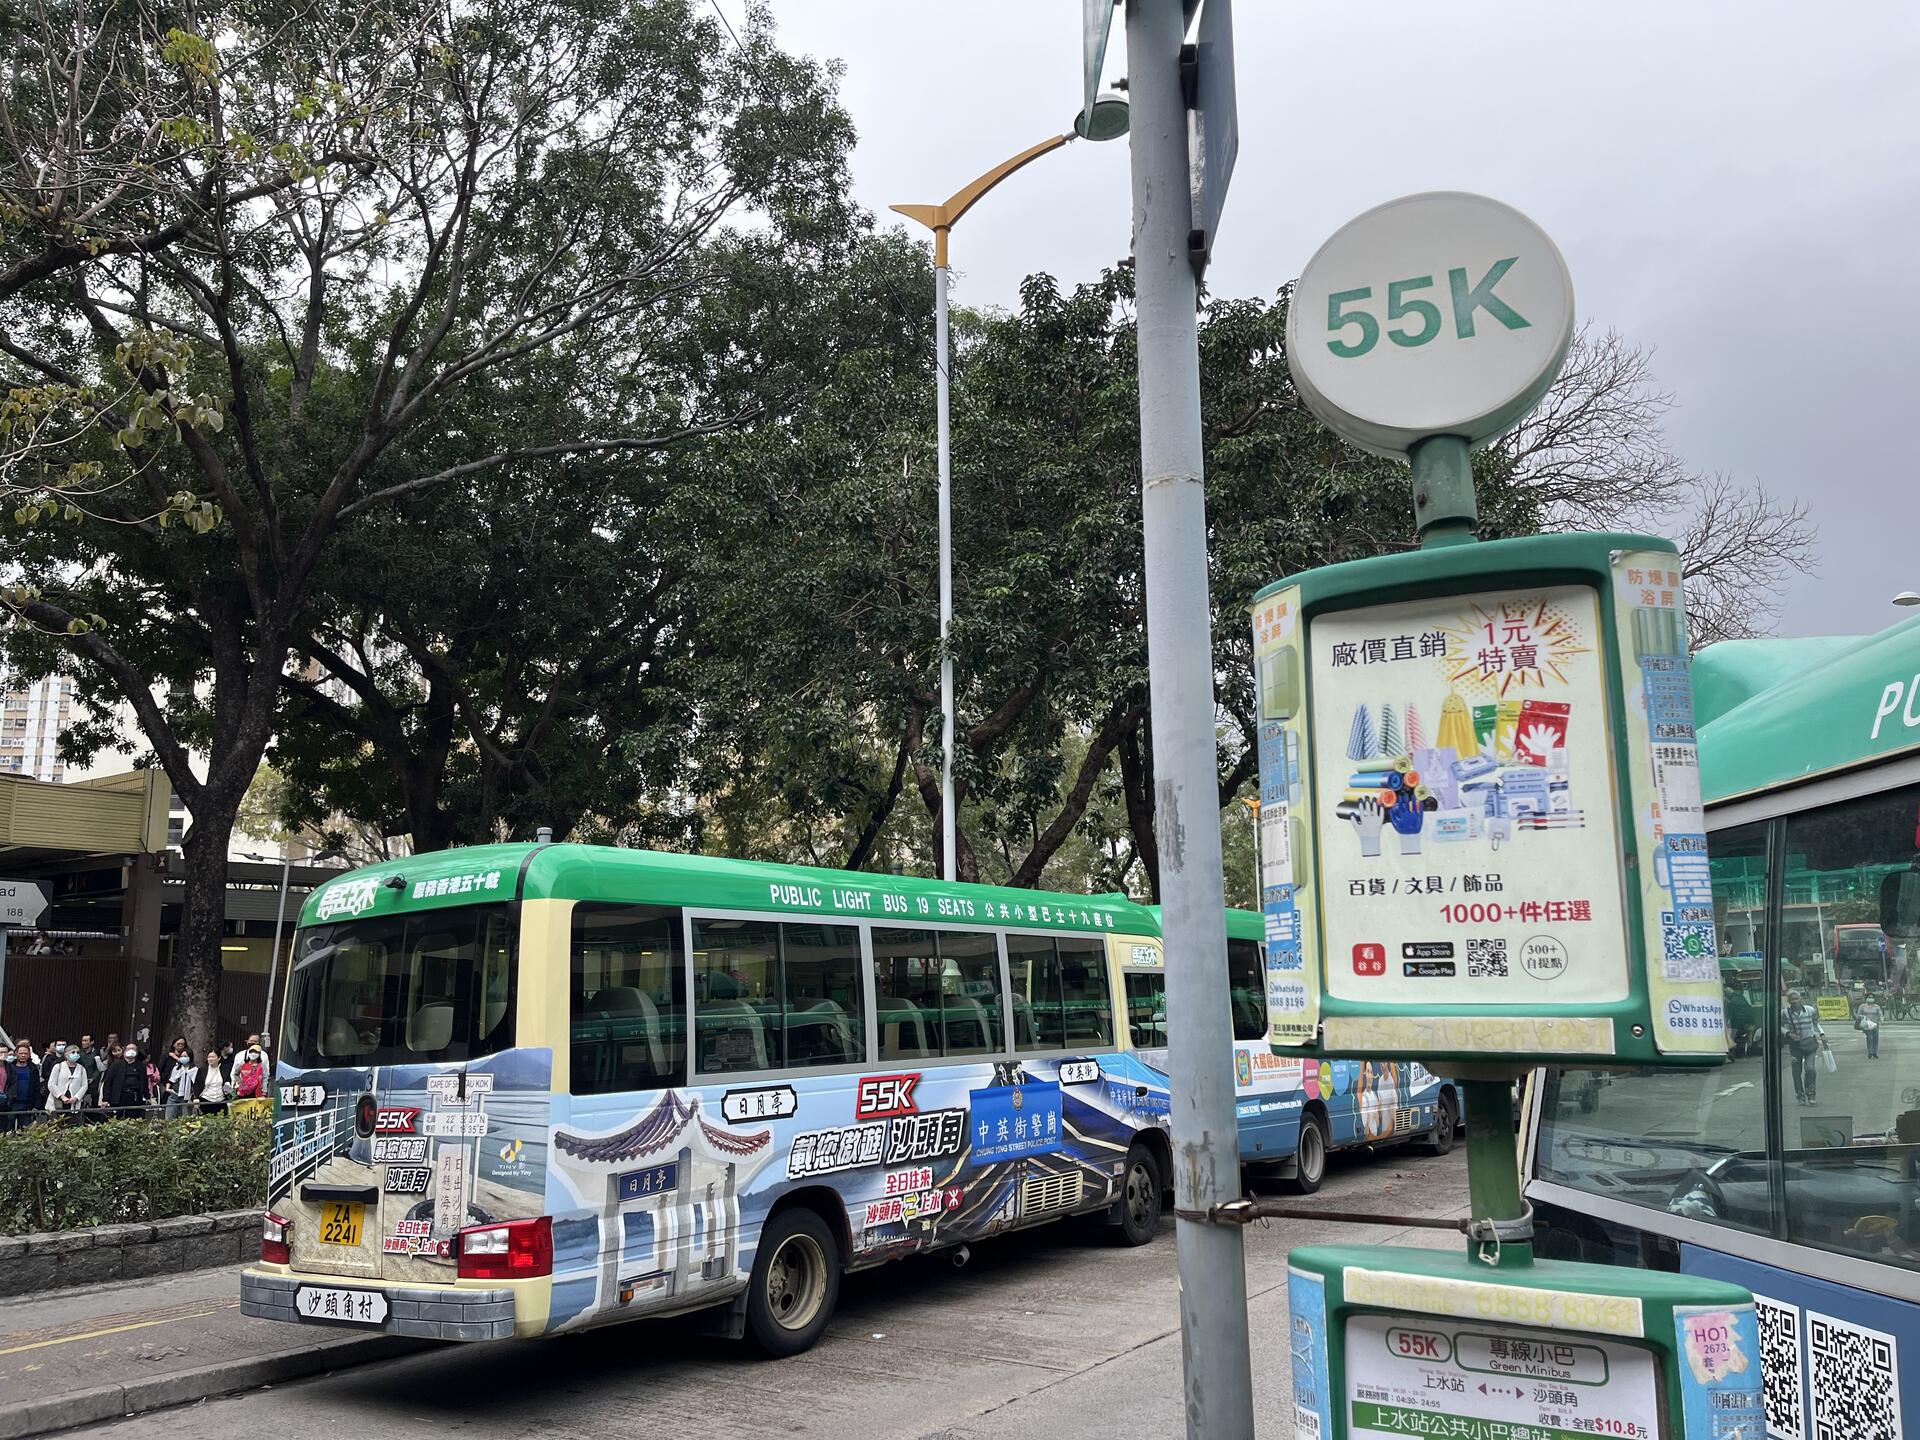 55K minibus stop